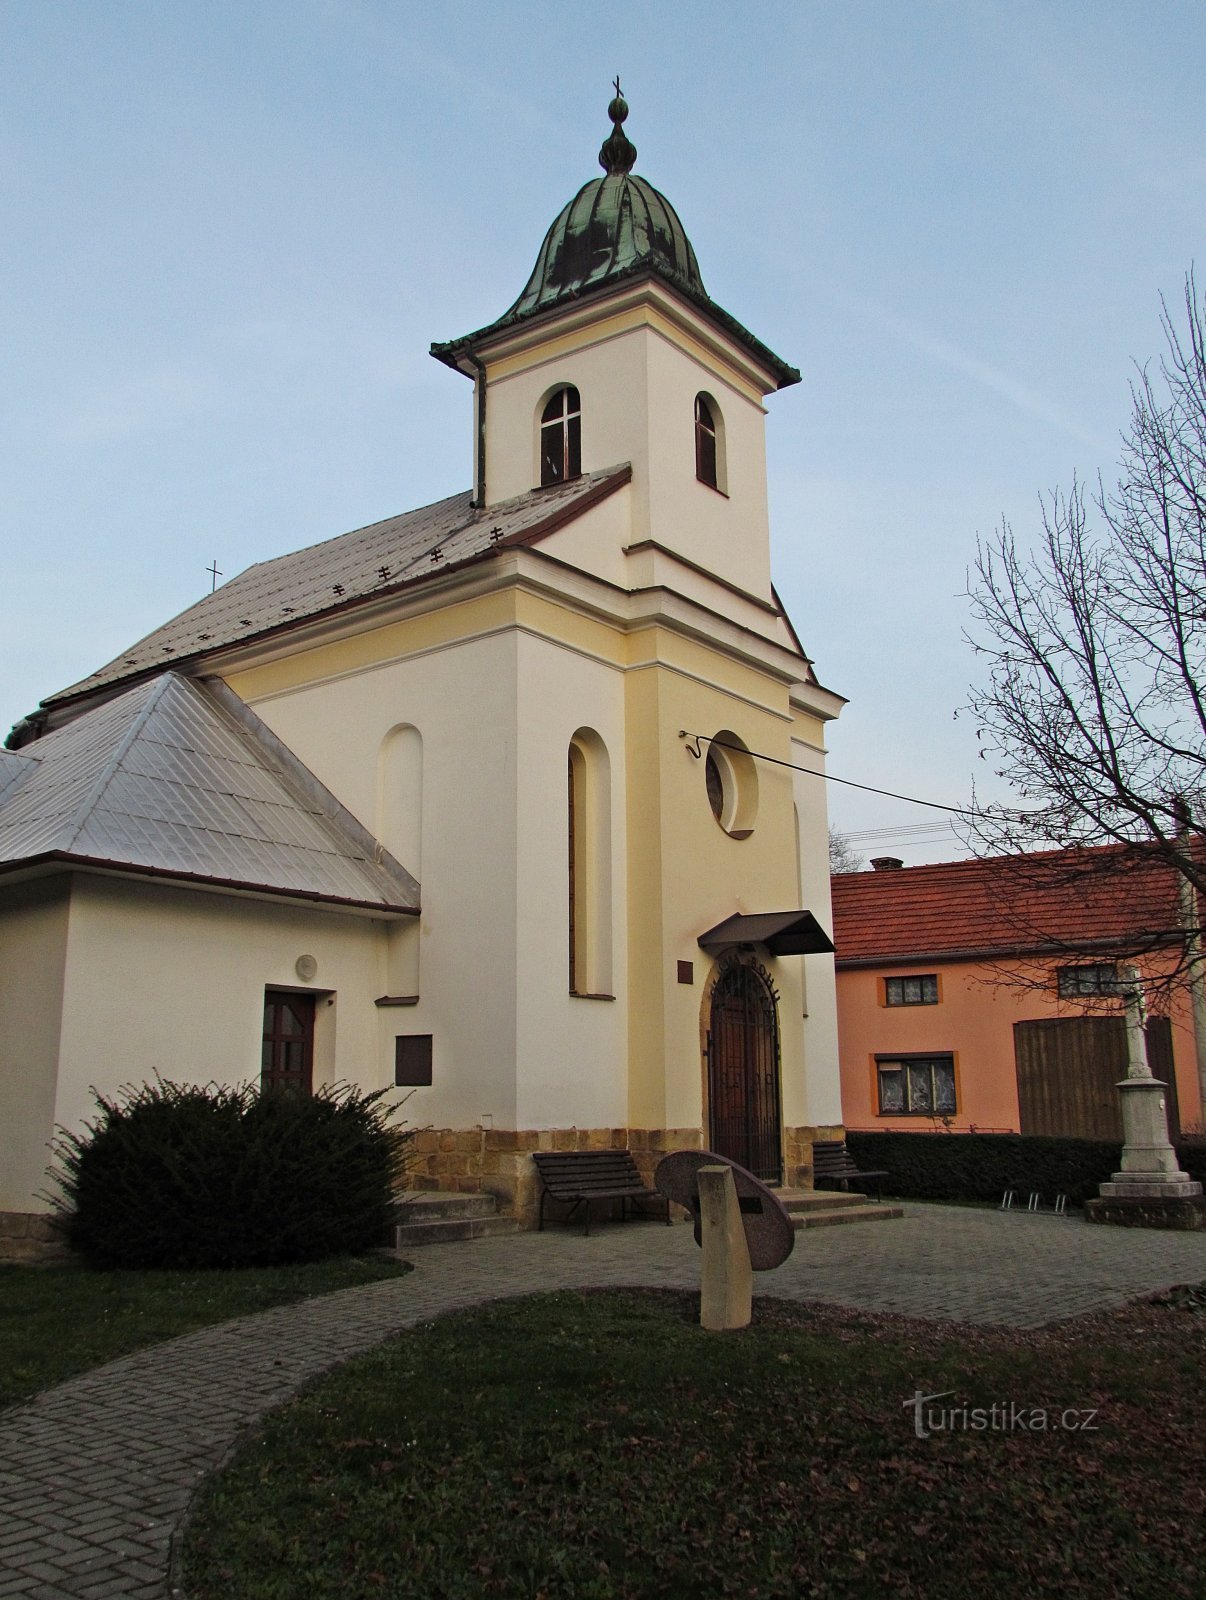 Hřivínův Újezd ​​- chapel of St. Cyril and Methodius